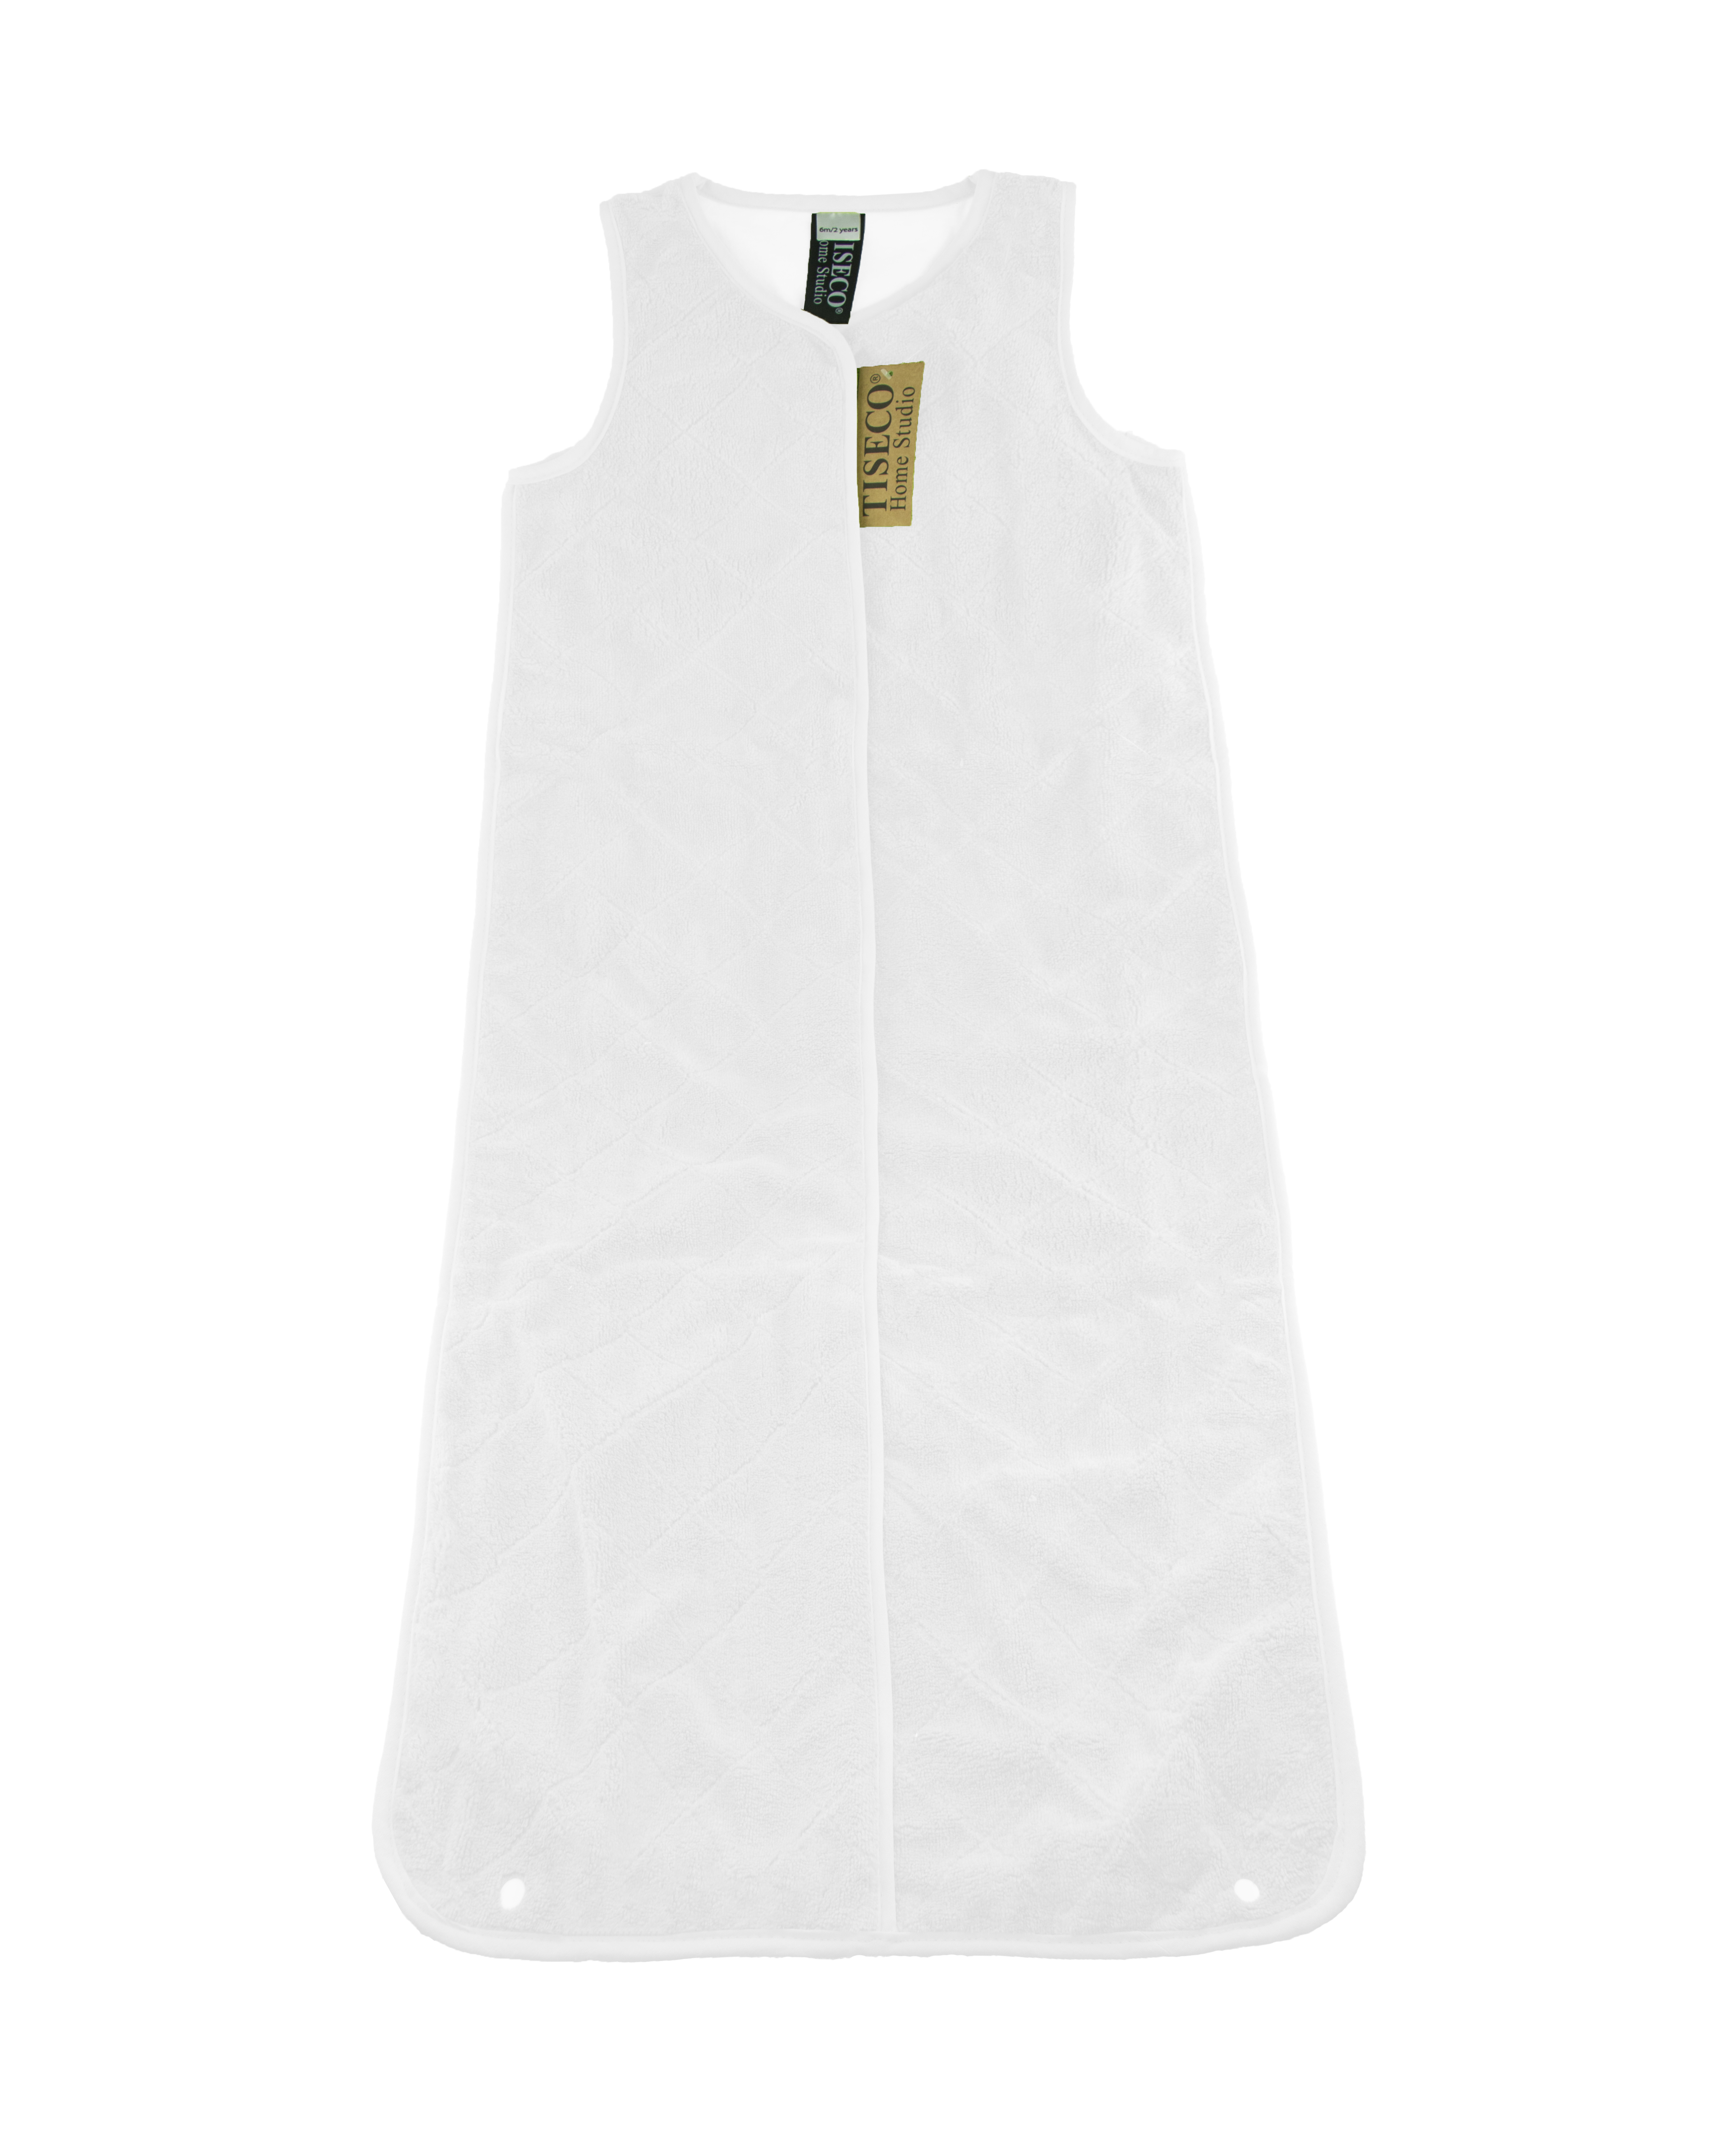 Baby sleepingbag uni - 50x70-90-110 cm, white